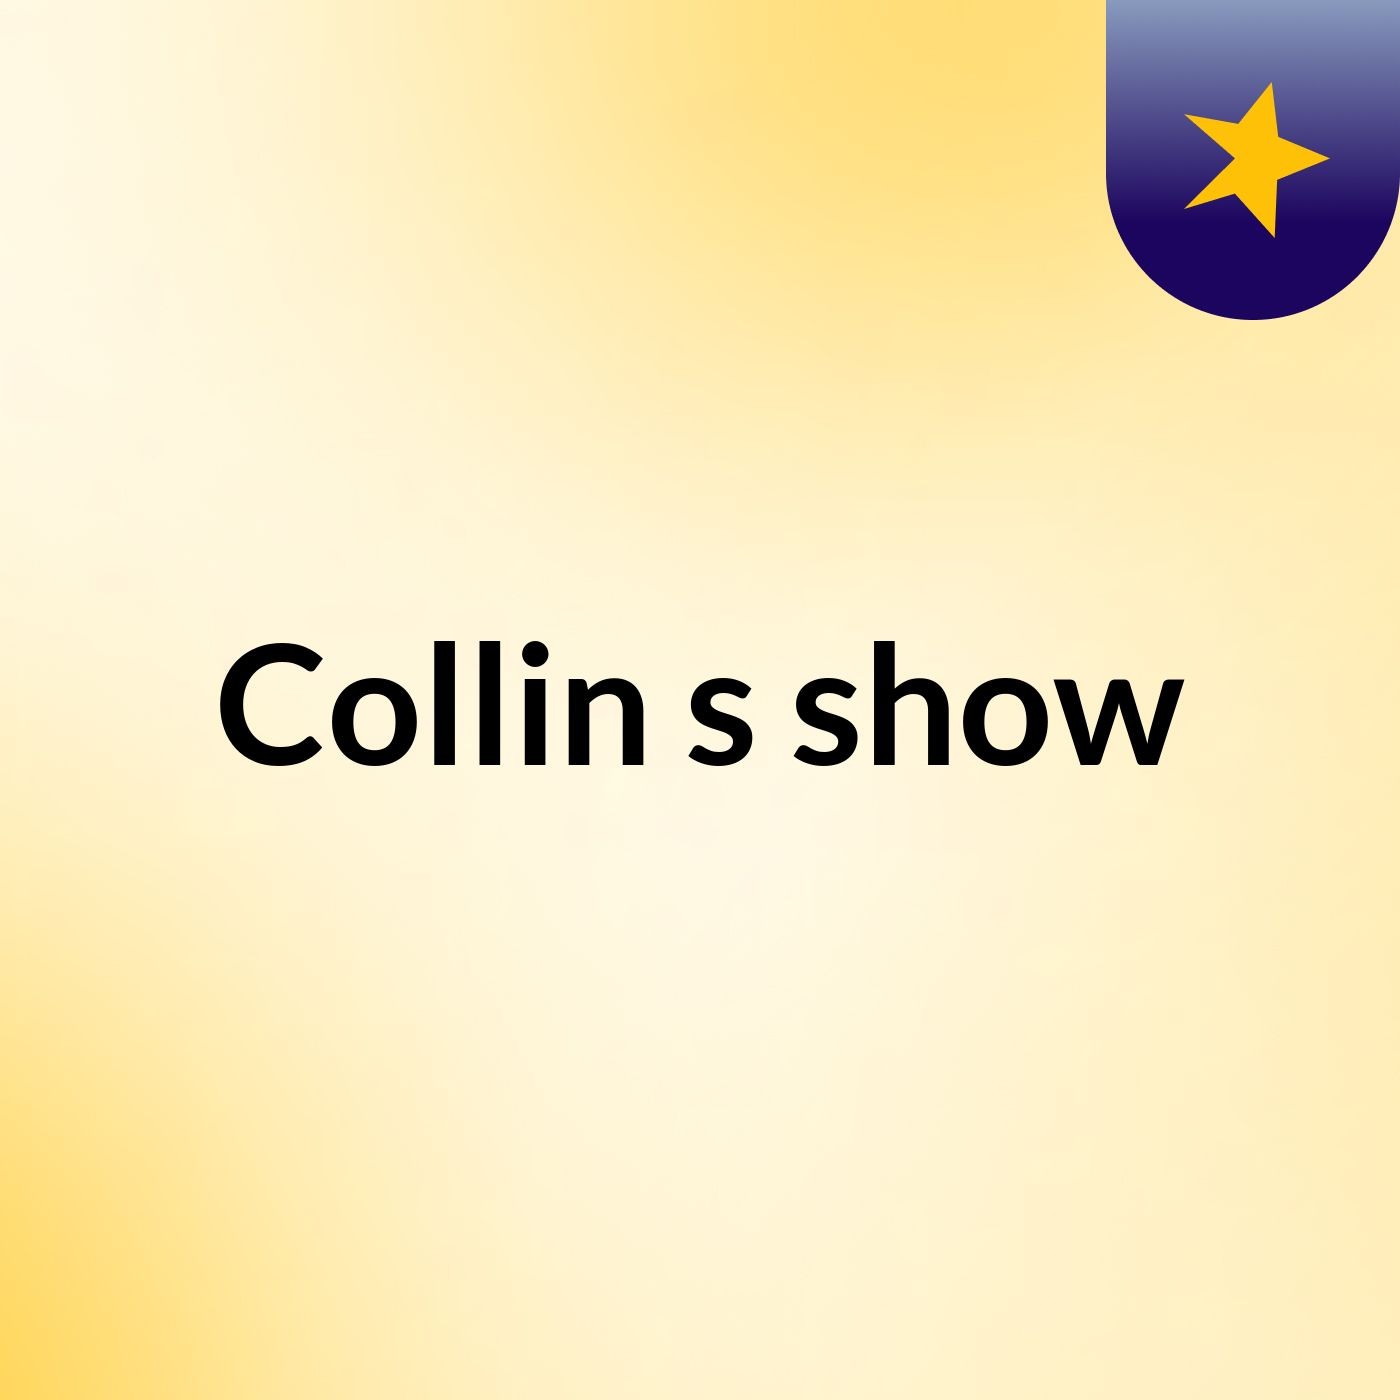 Collin's show